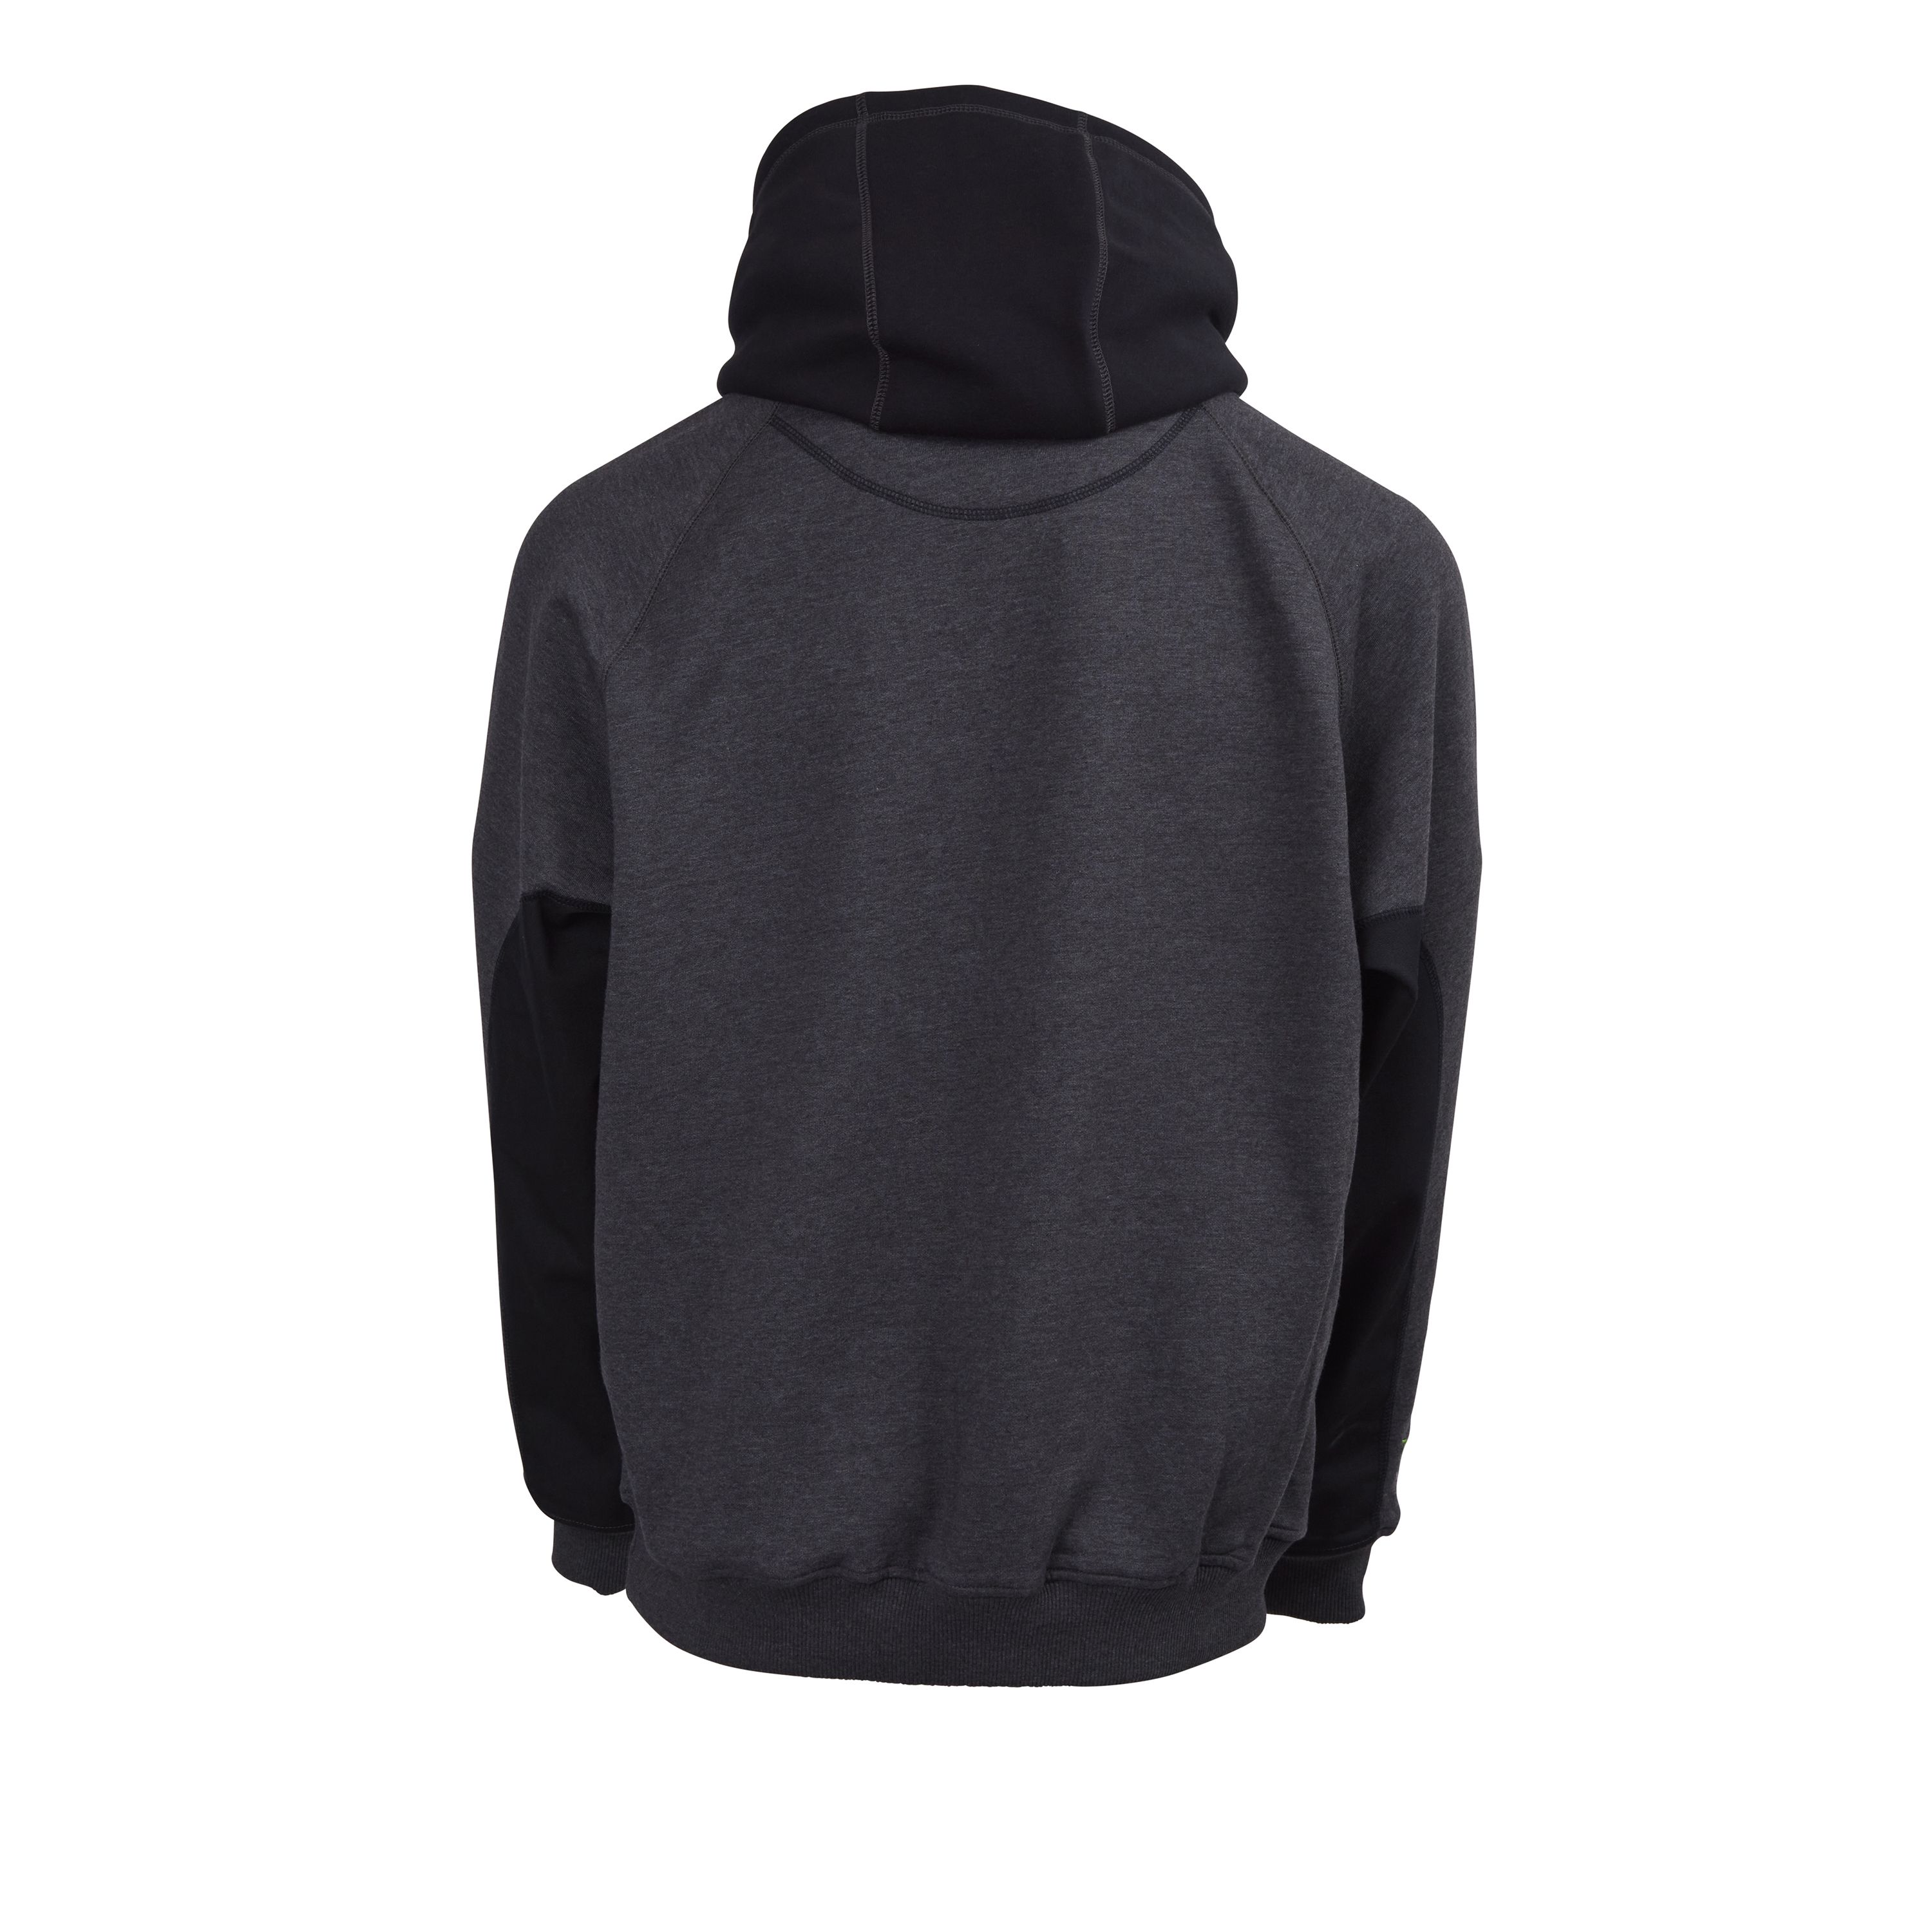 Apache Industrial Wear Grey & black Men's Hooded sweatshirt Large